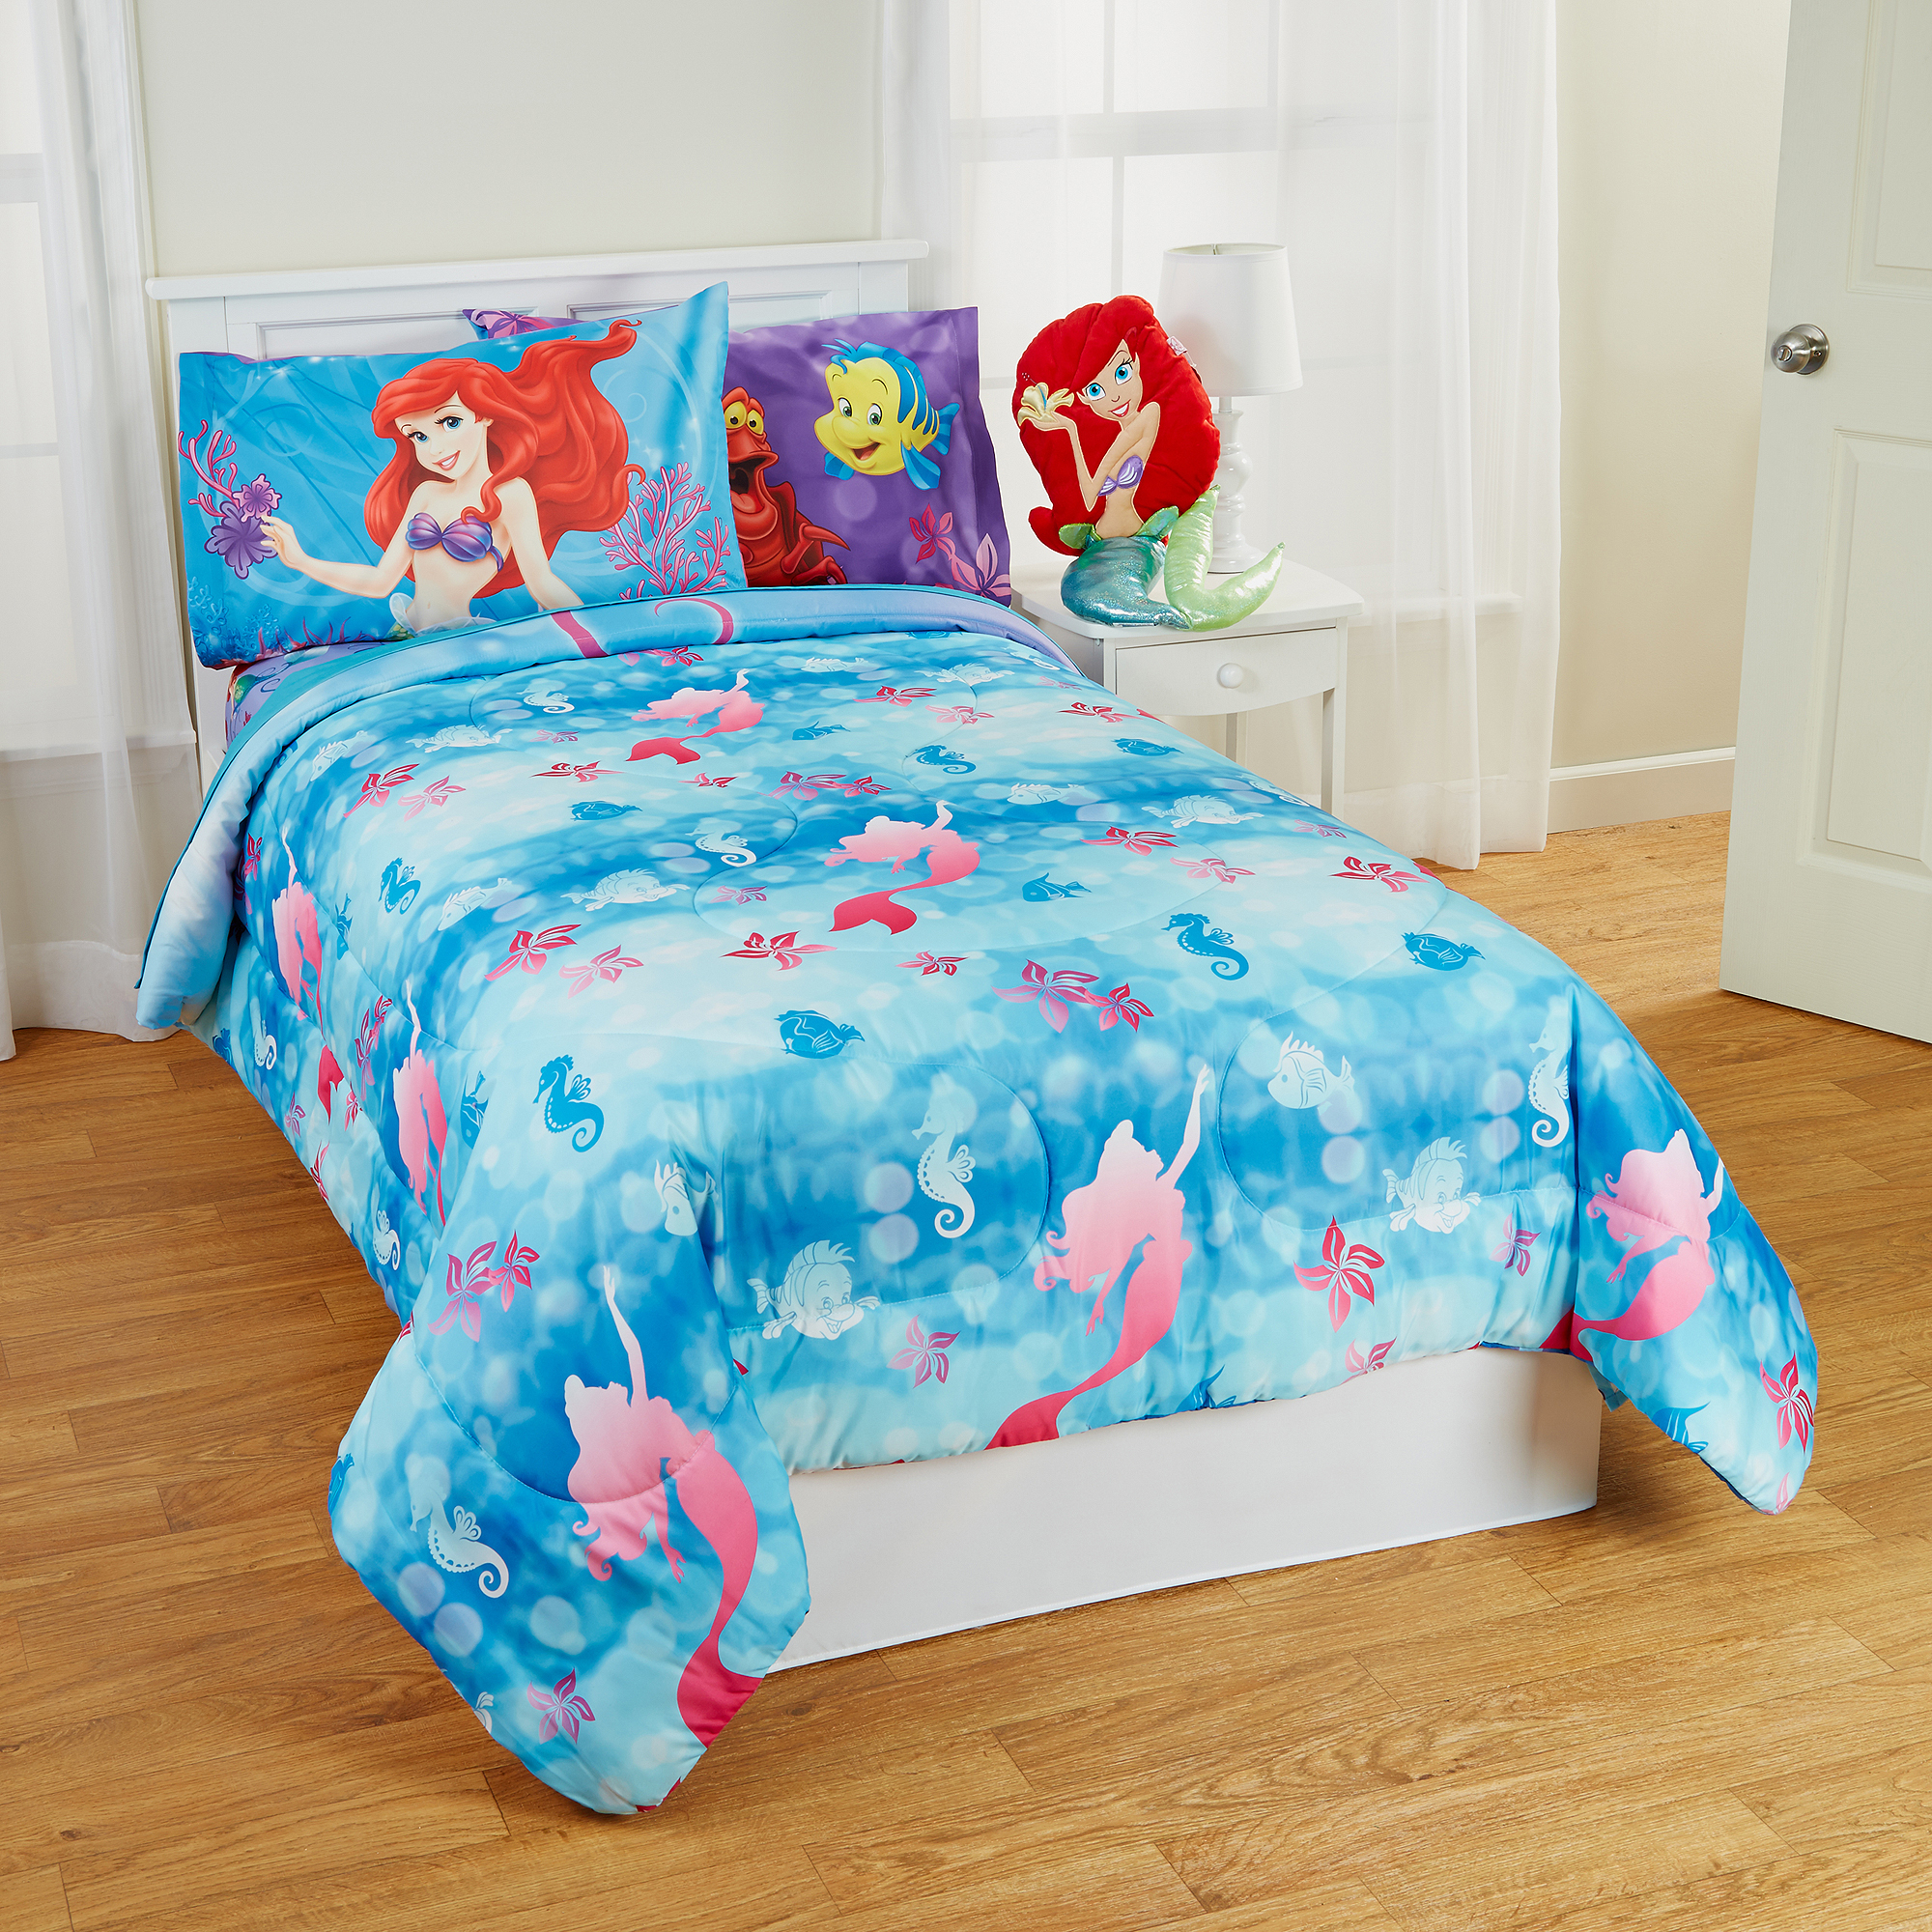 New dora bedding set twin Dora And Friends Microfiber Twin Full Comforter 72 X 86 Purple Comforters Sets Home Kitchen Guardebem Com